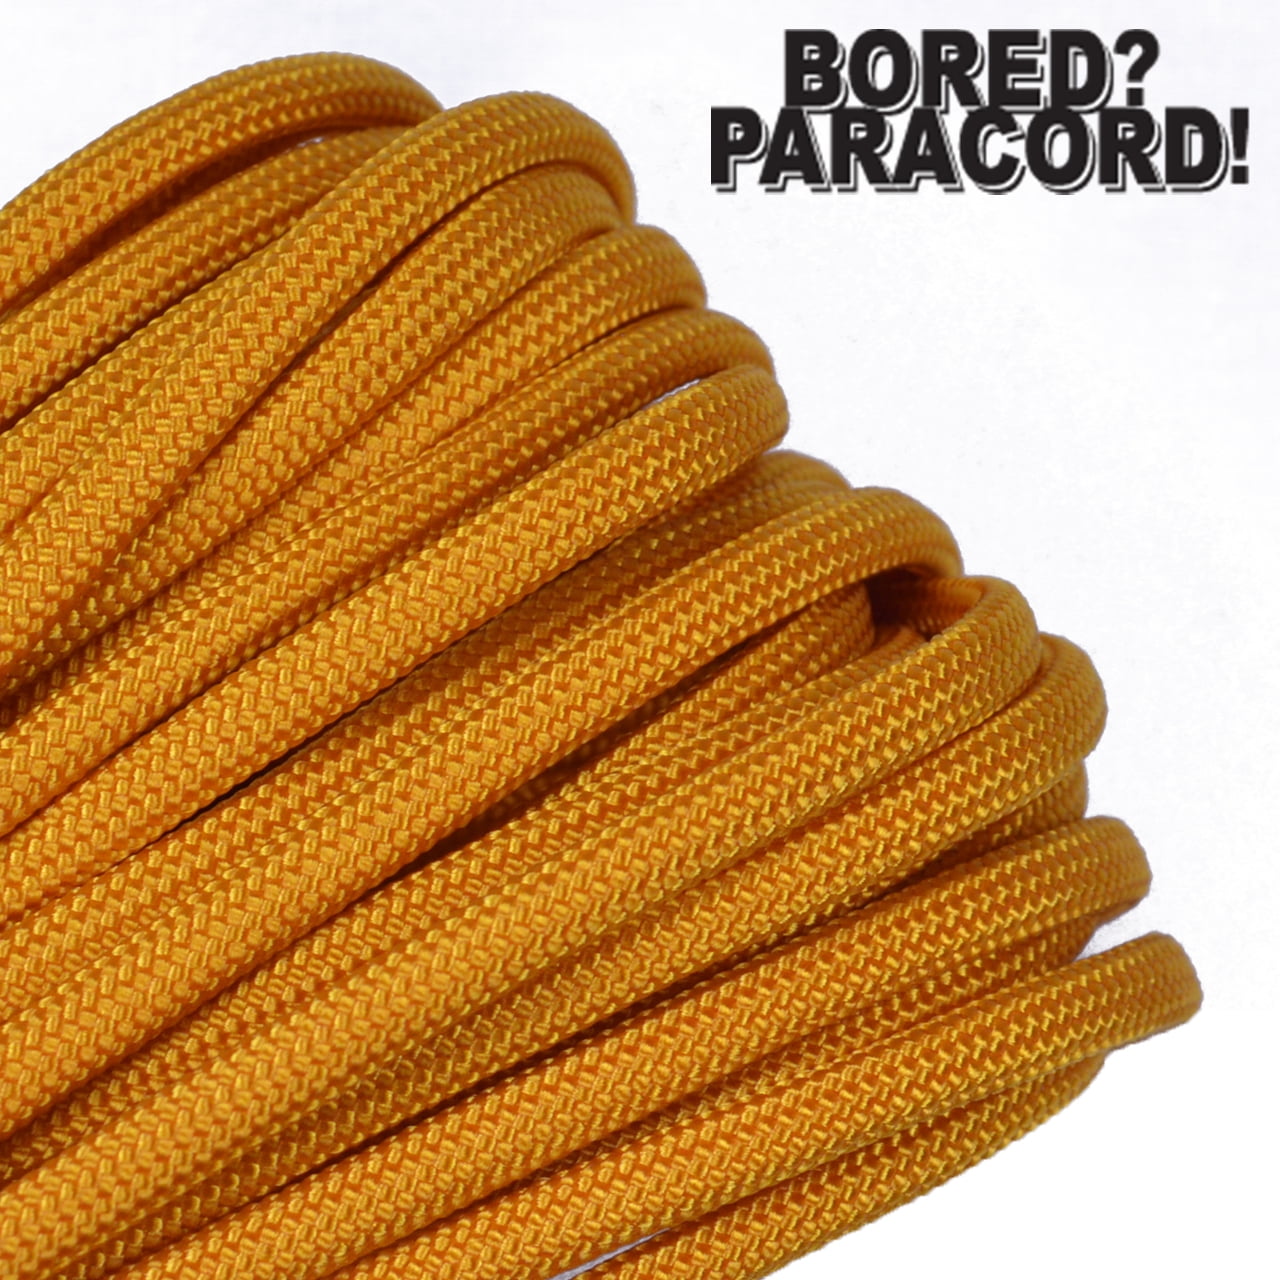 100 feet BoredParacord Brand 550 lb Mustard Yellow